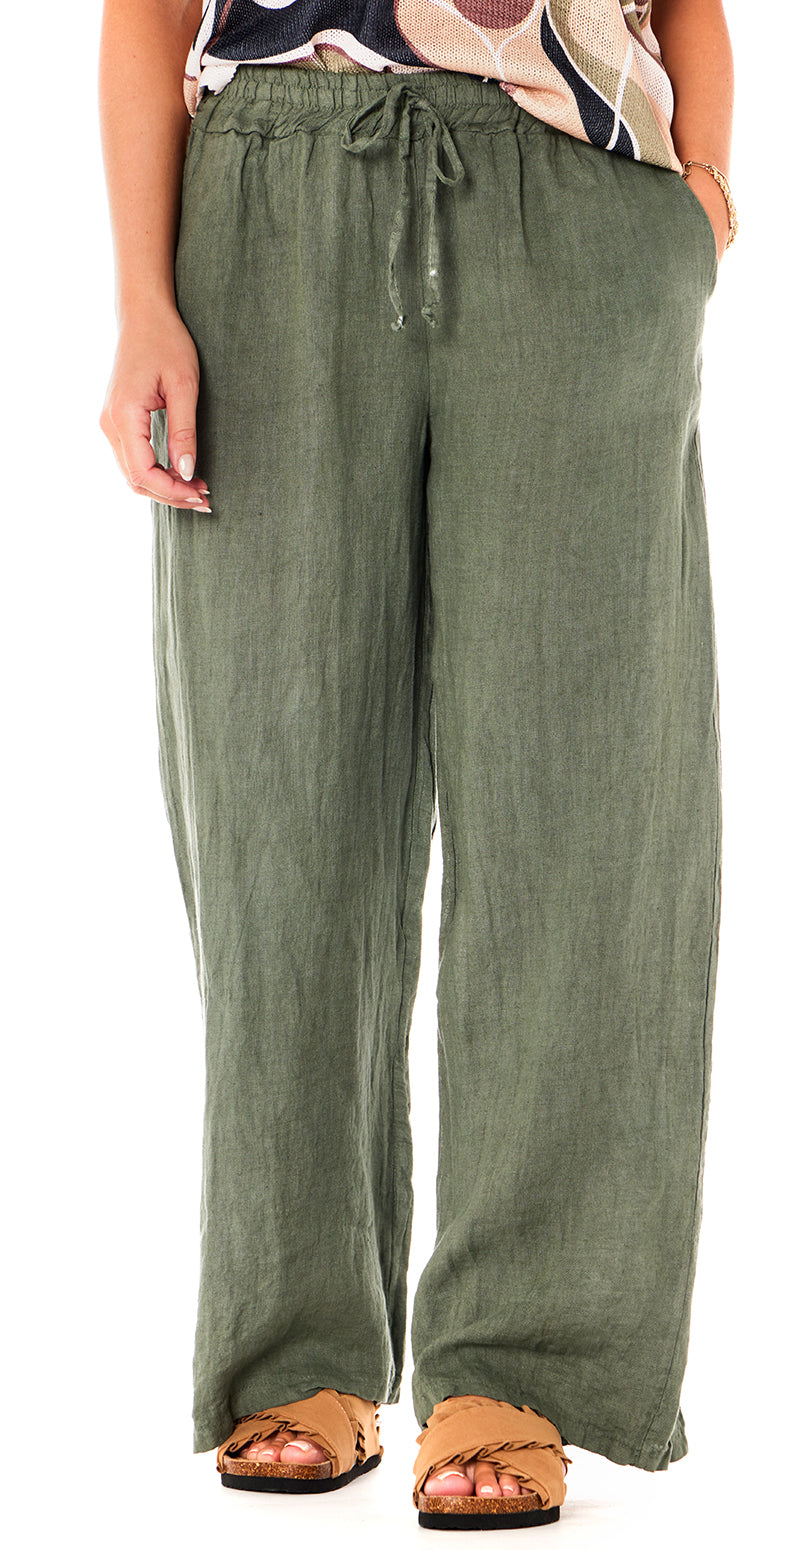 vision Forsøg involveret Hør bukser med lommer og elastik i taljen khaki Likelondon – LikeLondon.com